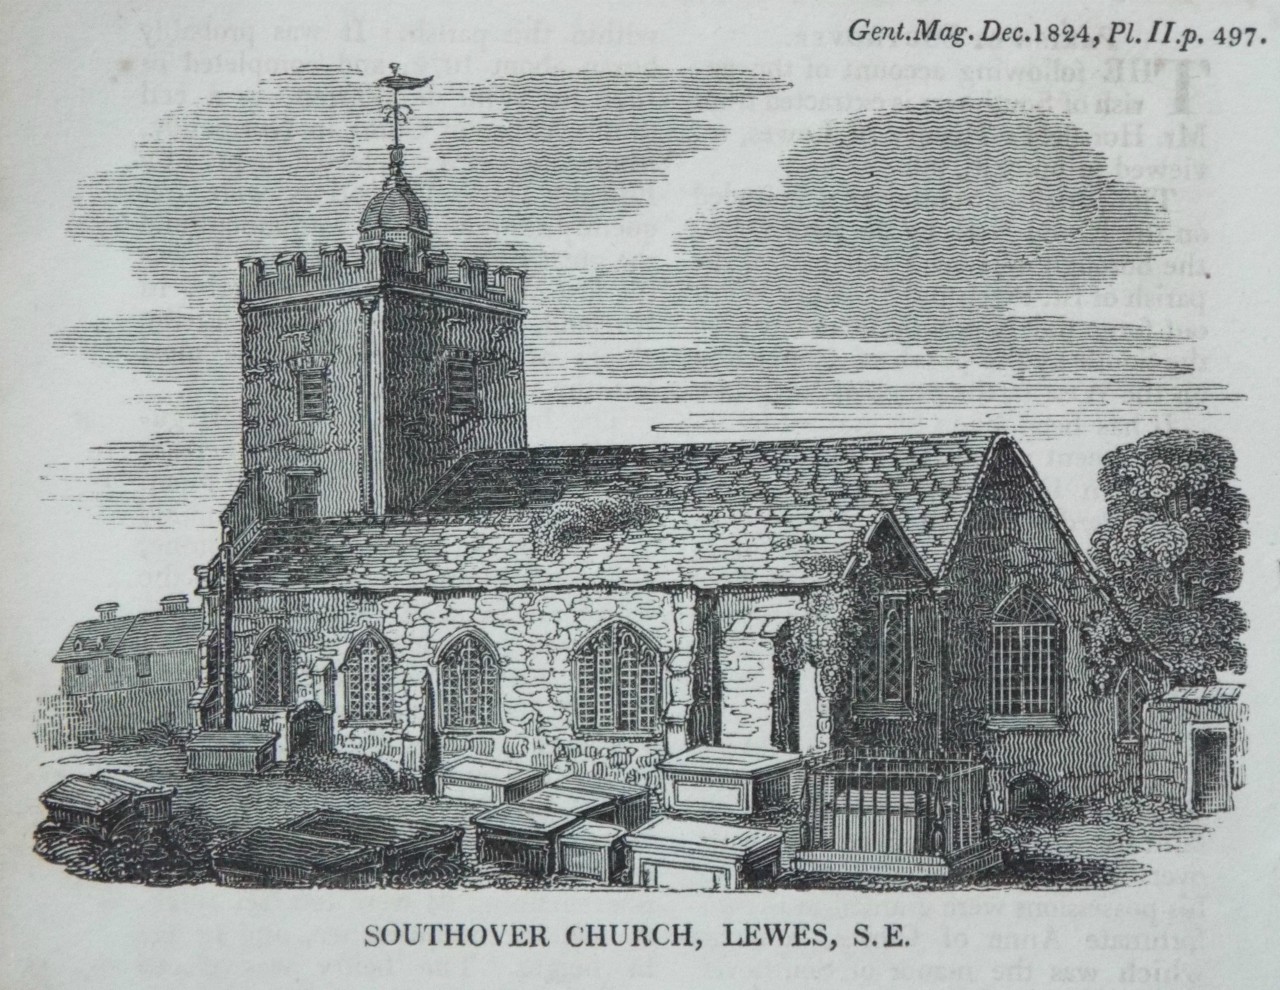 Wood - Southover Church, Lewes, S.E.